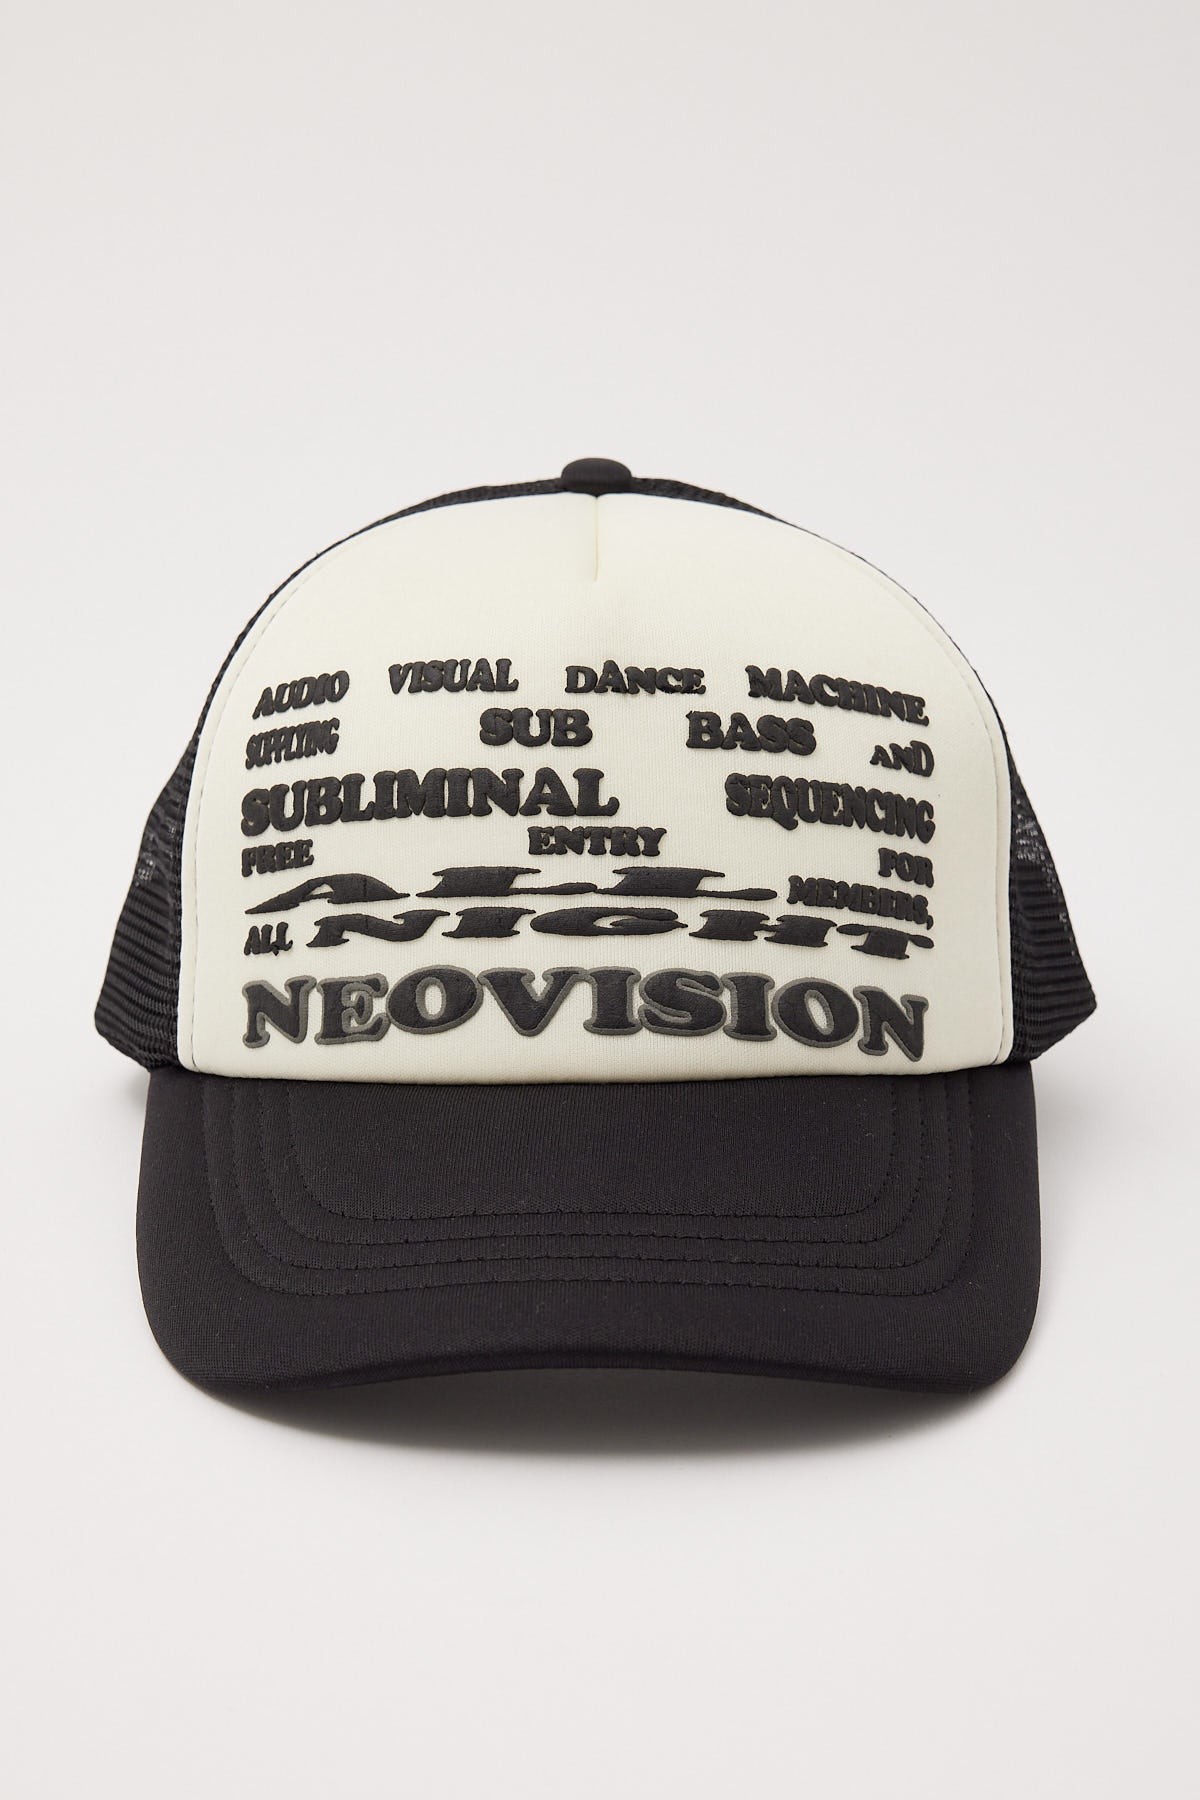 Neovision All Night Trucker Black/Off White